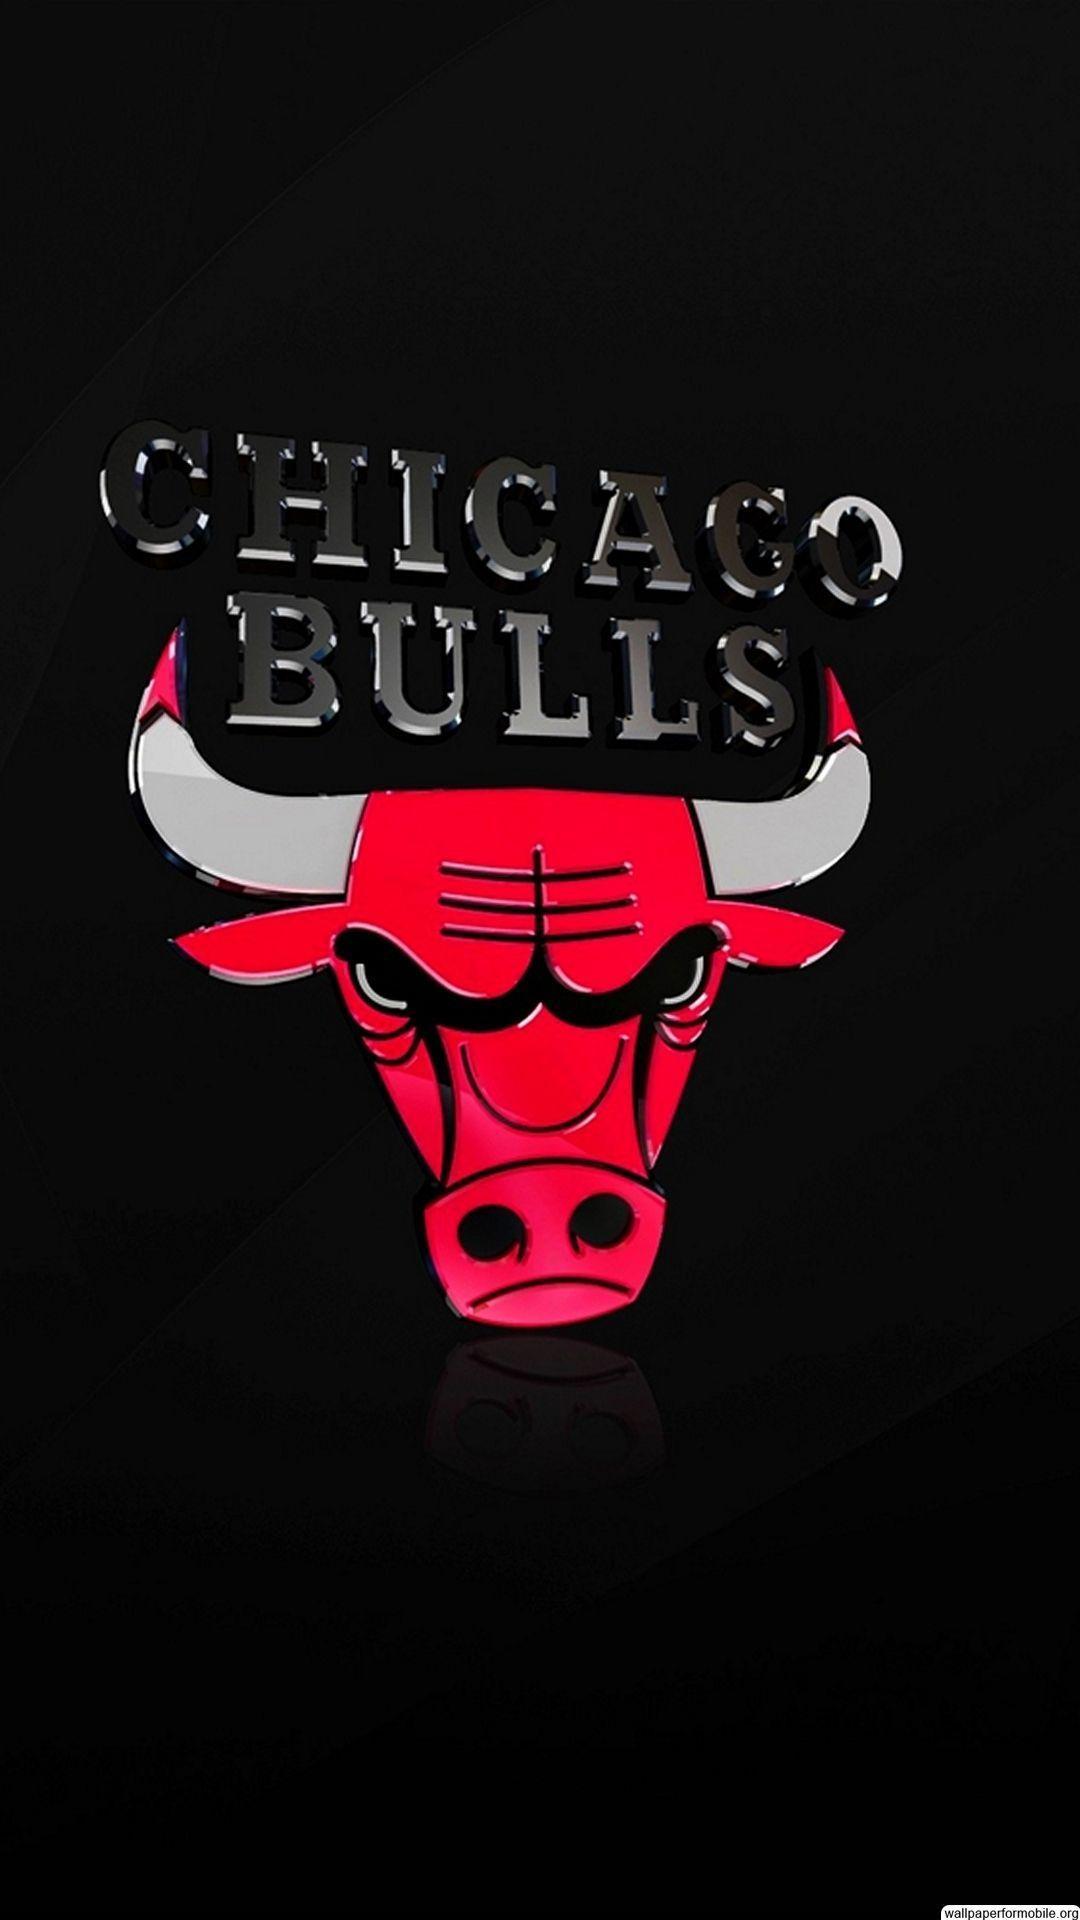 Free Chicago Bulls Wallpaper Downloads for Mobile